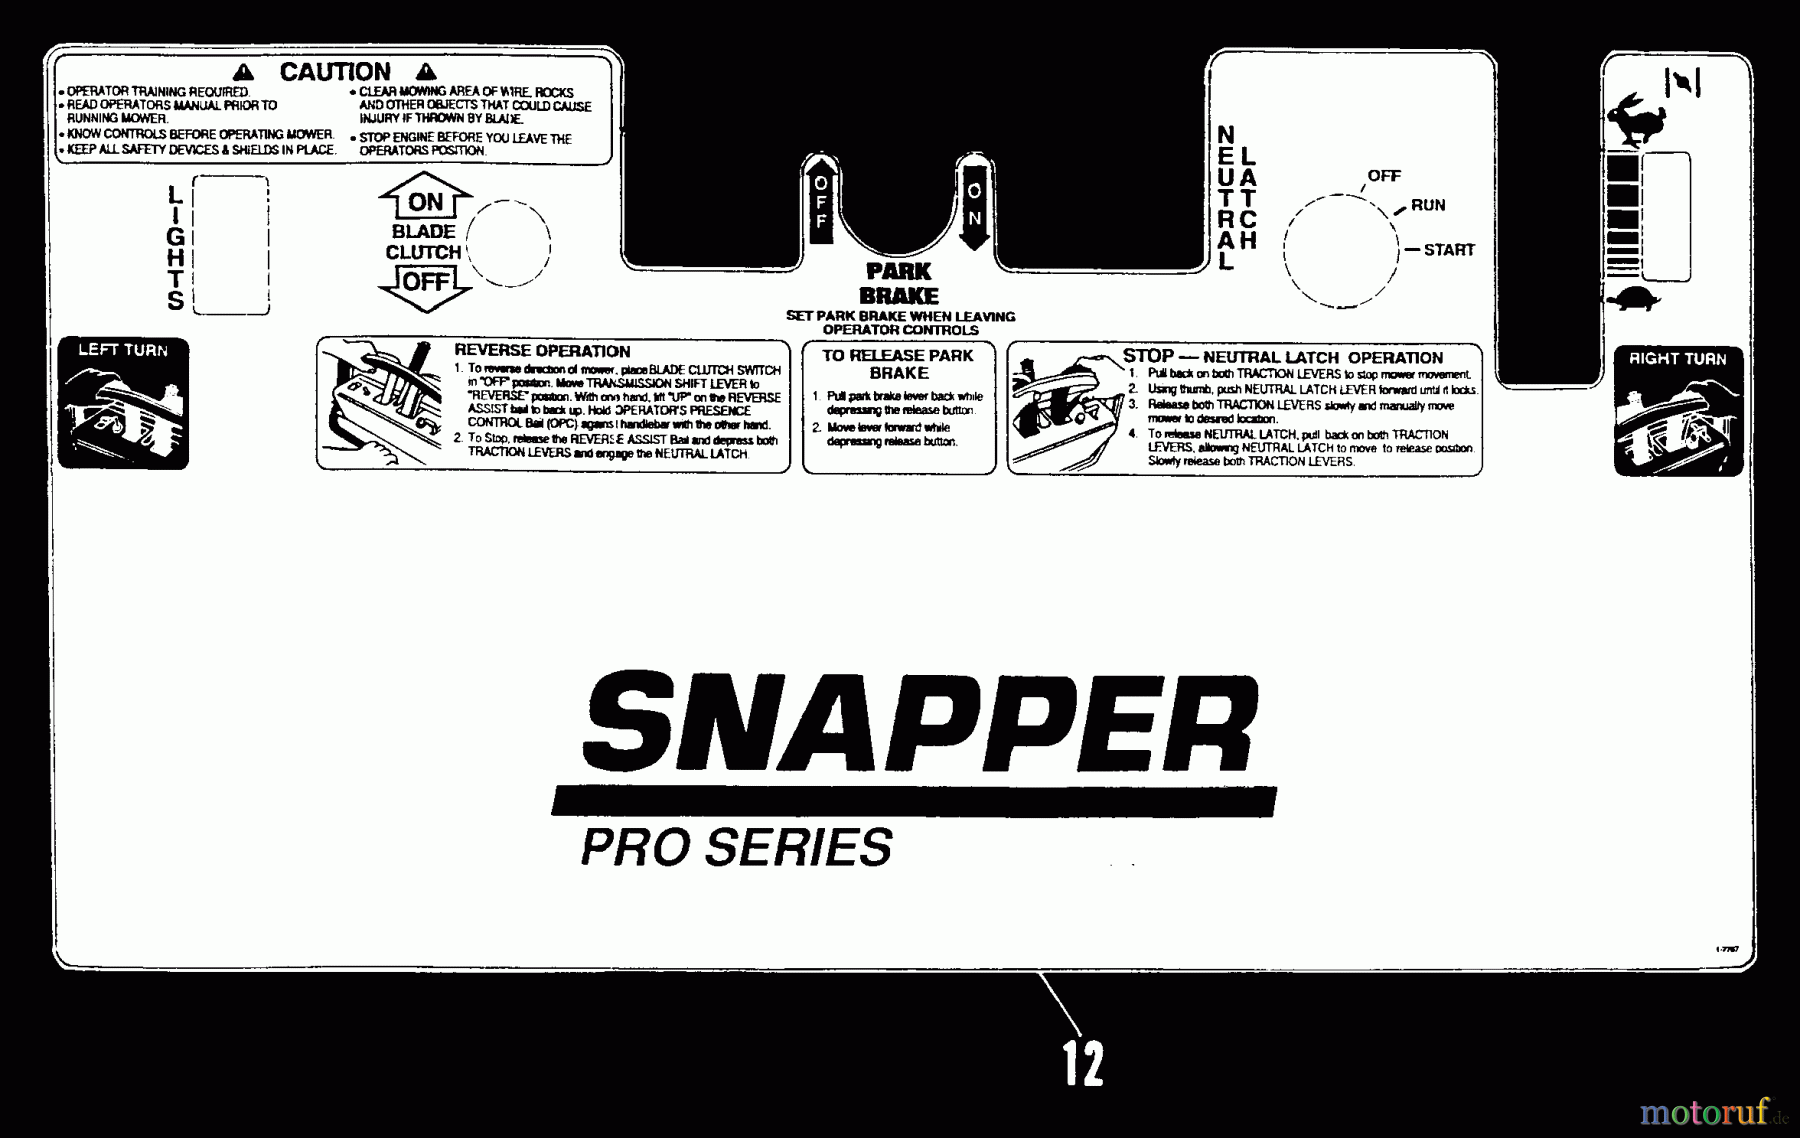  Snapper Rasenmäher für Großflächen PL8180KE - Snapper Wide-Area Walk-Behind Mower, 18 HP, Gear Drive, Loop Handle, Series 0 Decal Kit (Part 2)